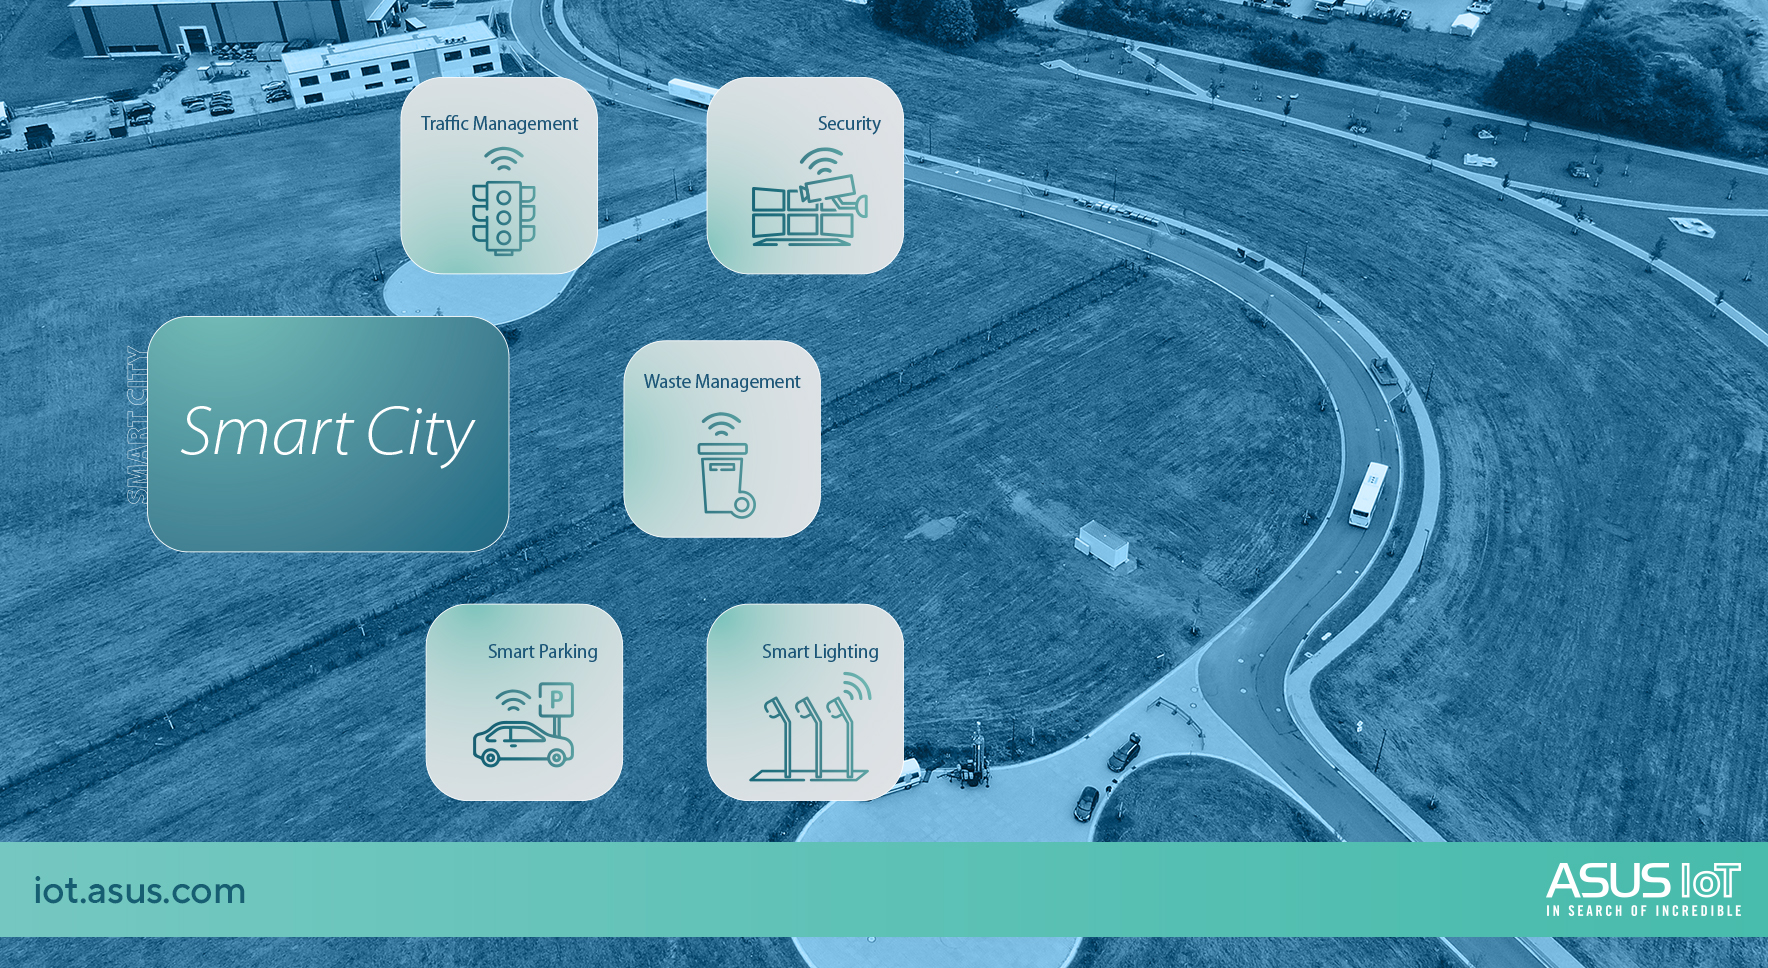 ASUS-IoT-smart-city-solutions-TIP-park